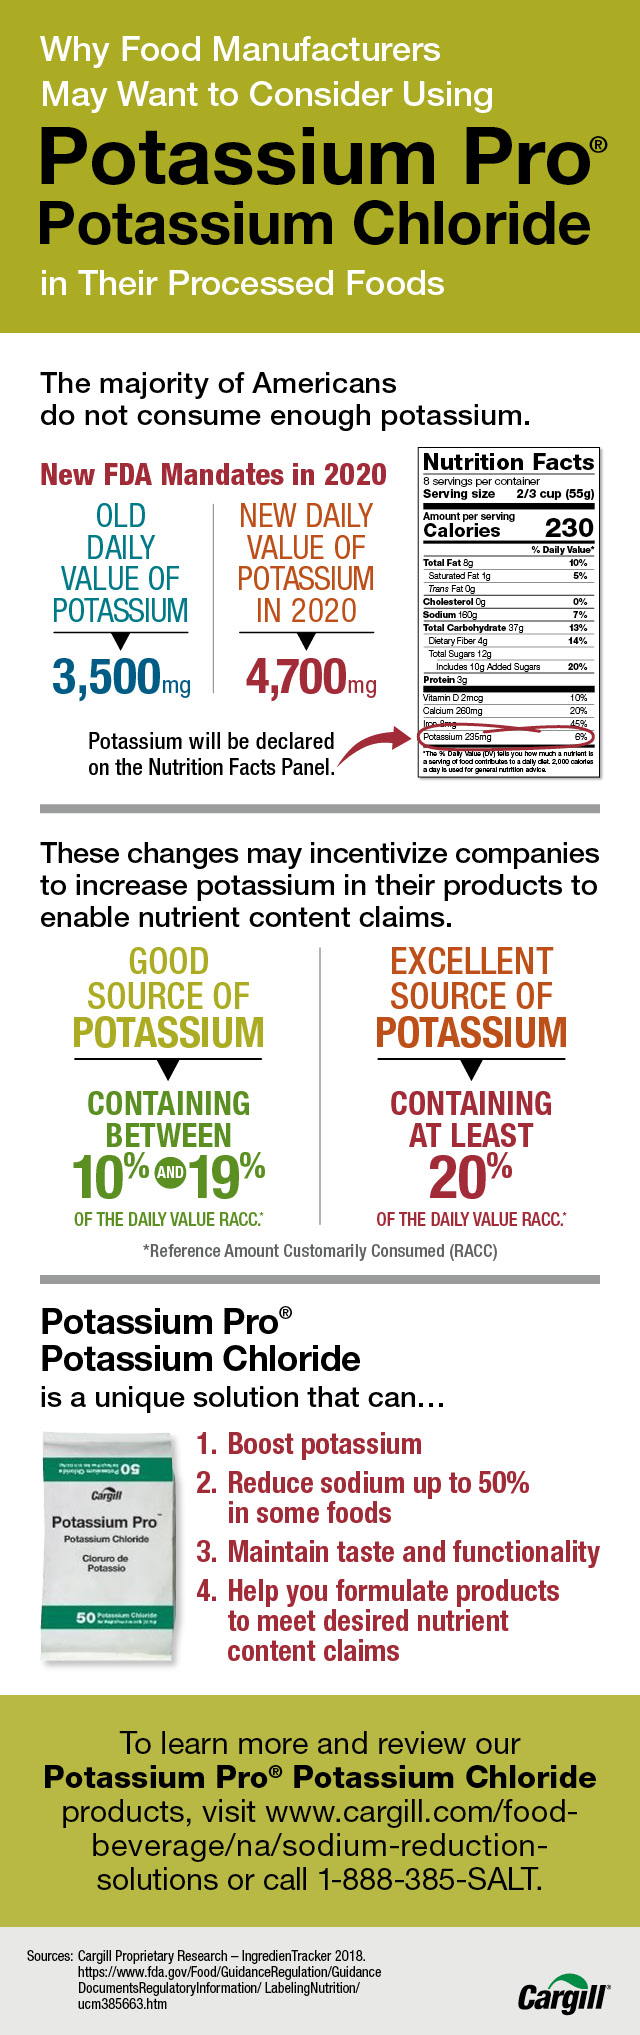 Upcoming FDA mandates to highlight potassium